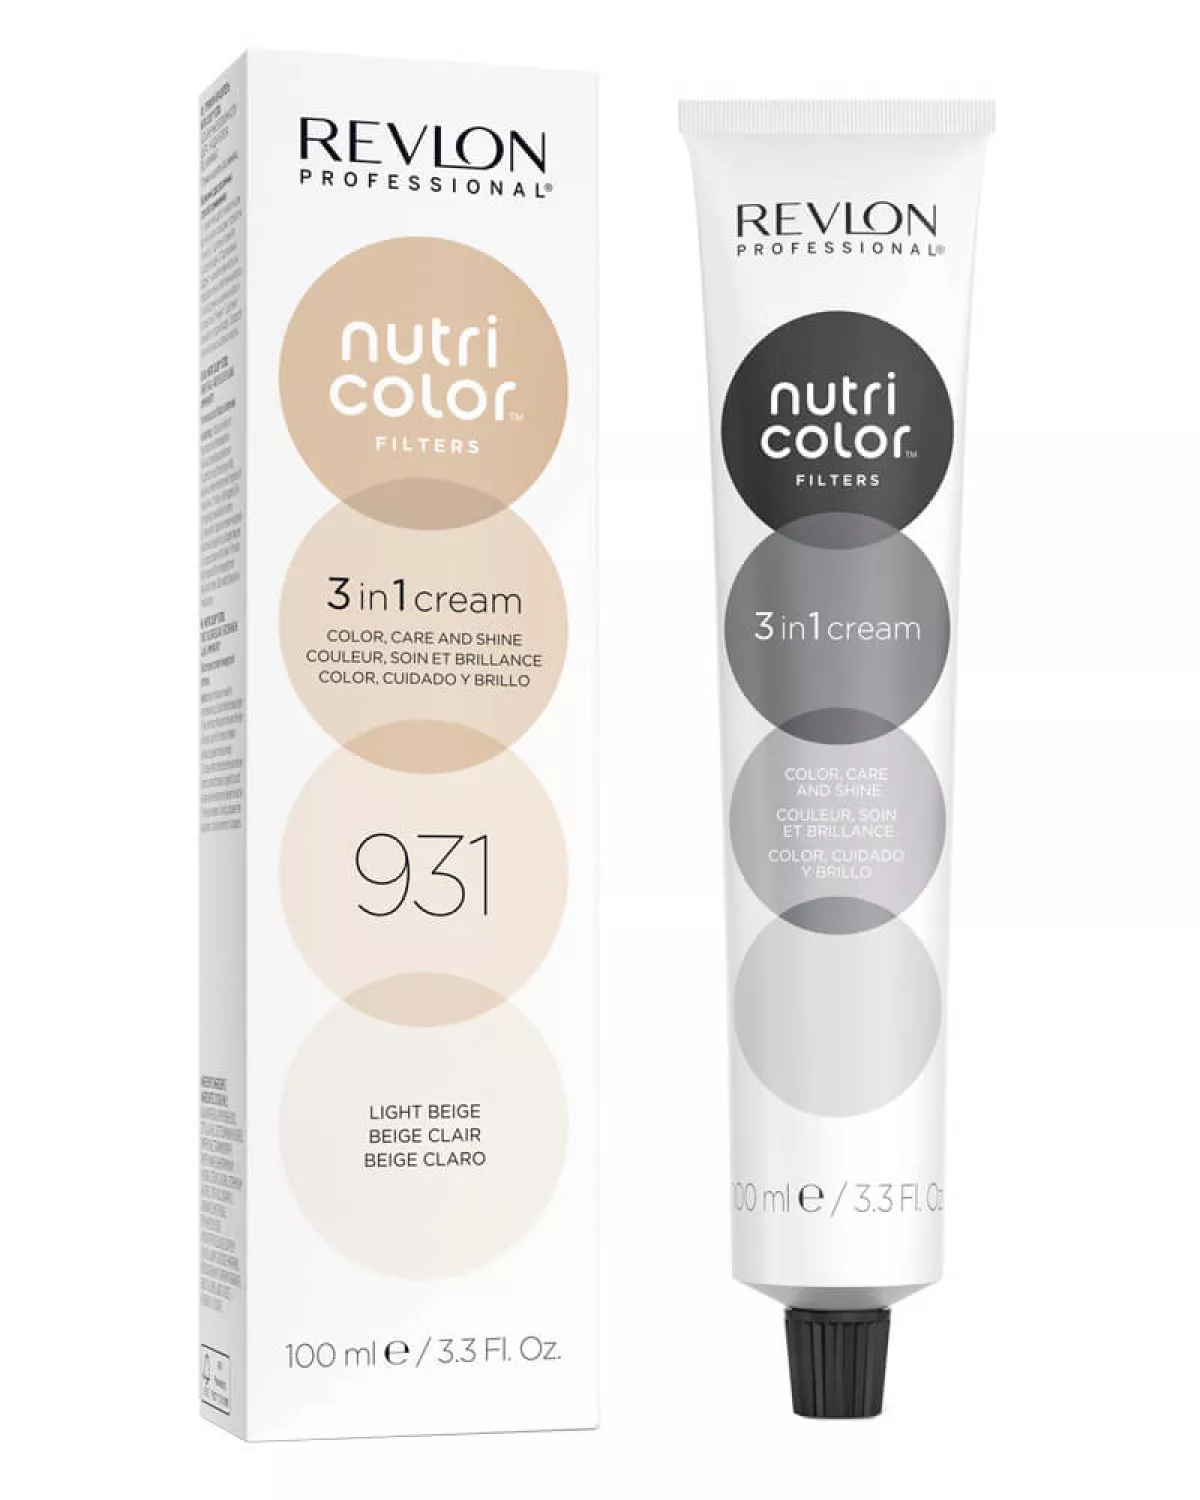 #1 - Revlon Nutri Color Filters 931 100 ml